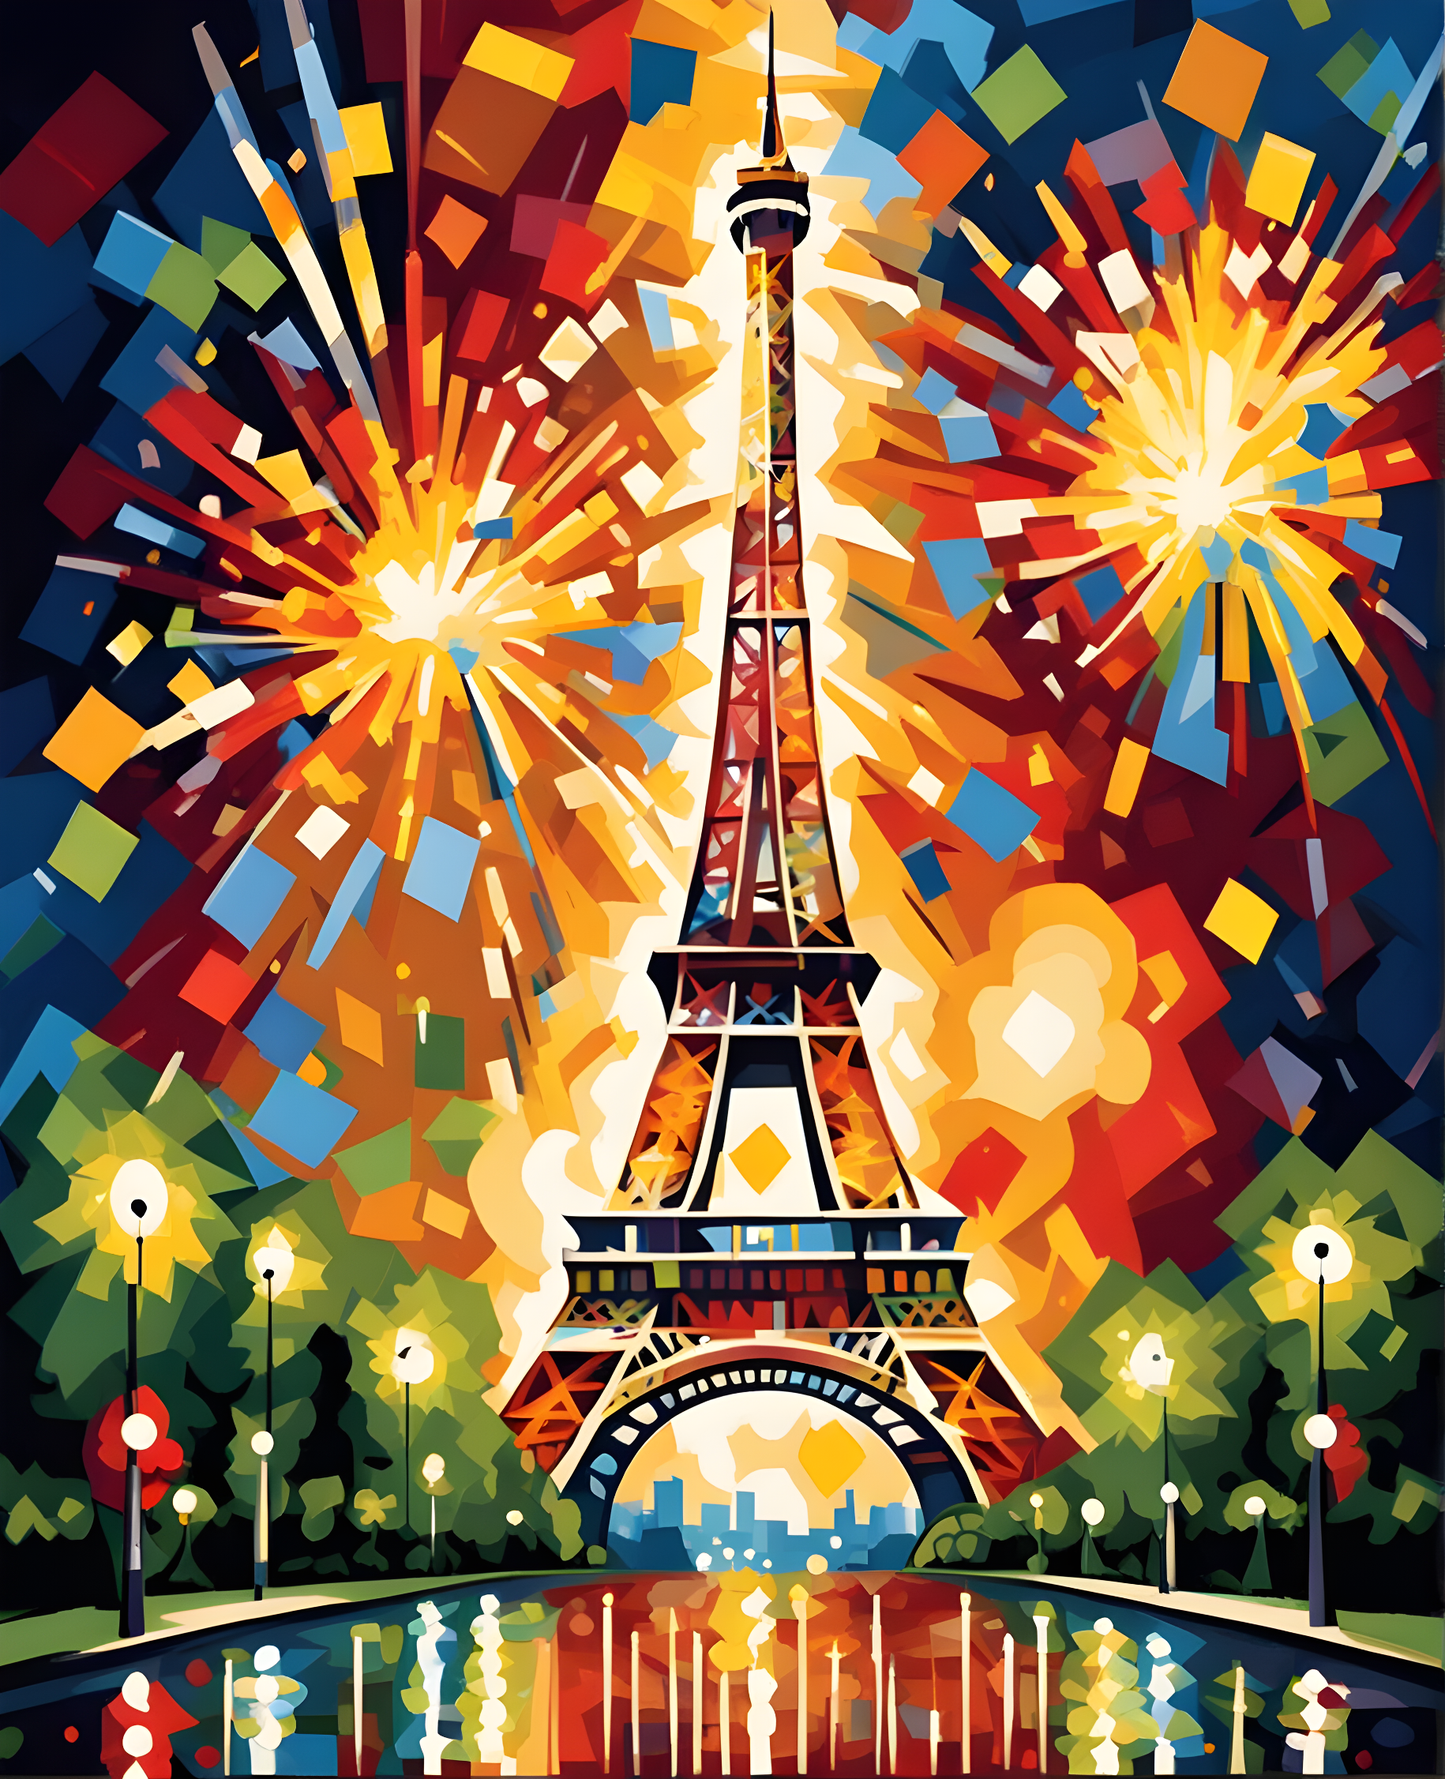 Eiffel Tower Fireworks (1) - Van-Go Paint-By-Number Kit